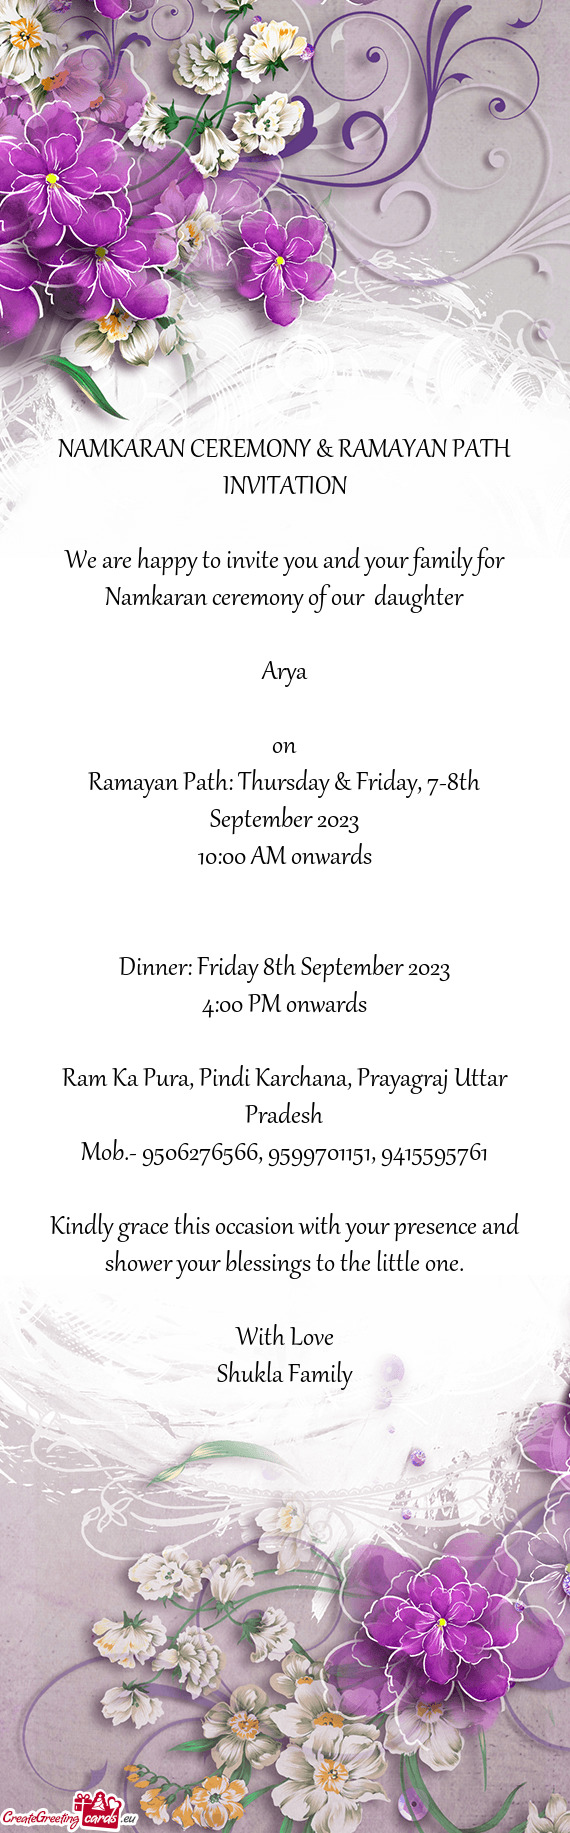 Ramayan Path: Thursday & Friday, 7-8th September 2023